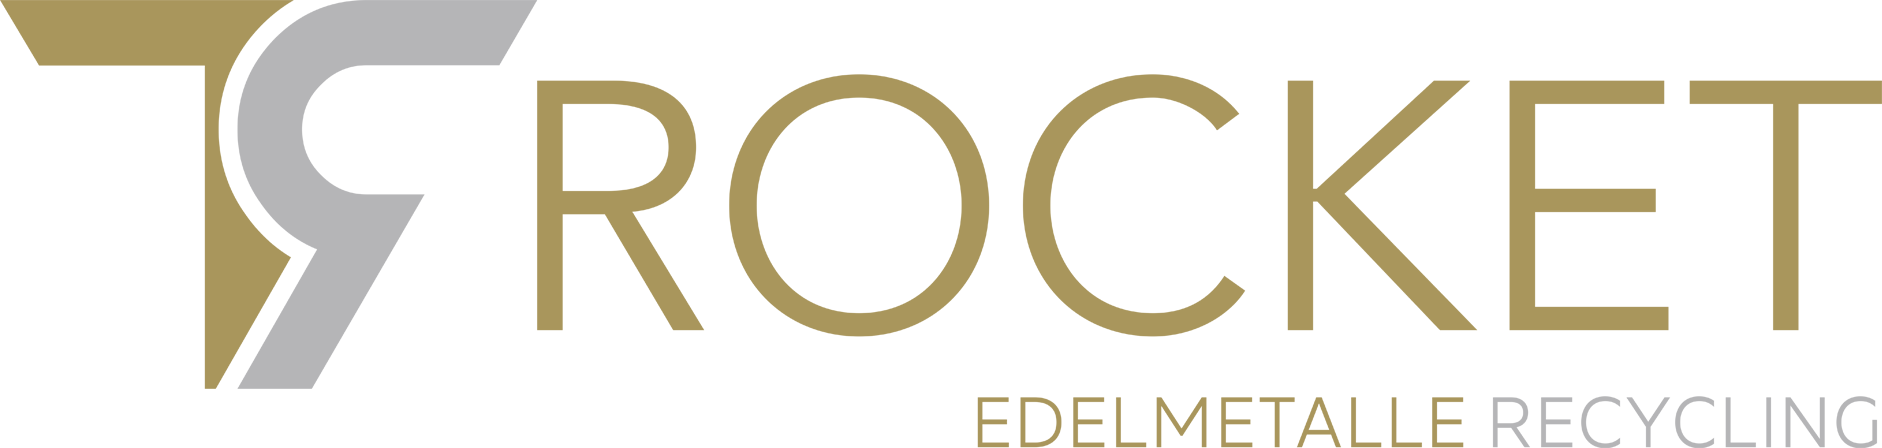 Rocket Edelmetalle logo